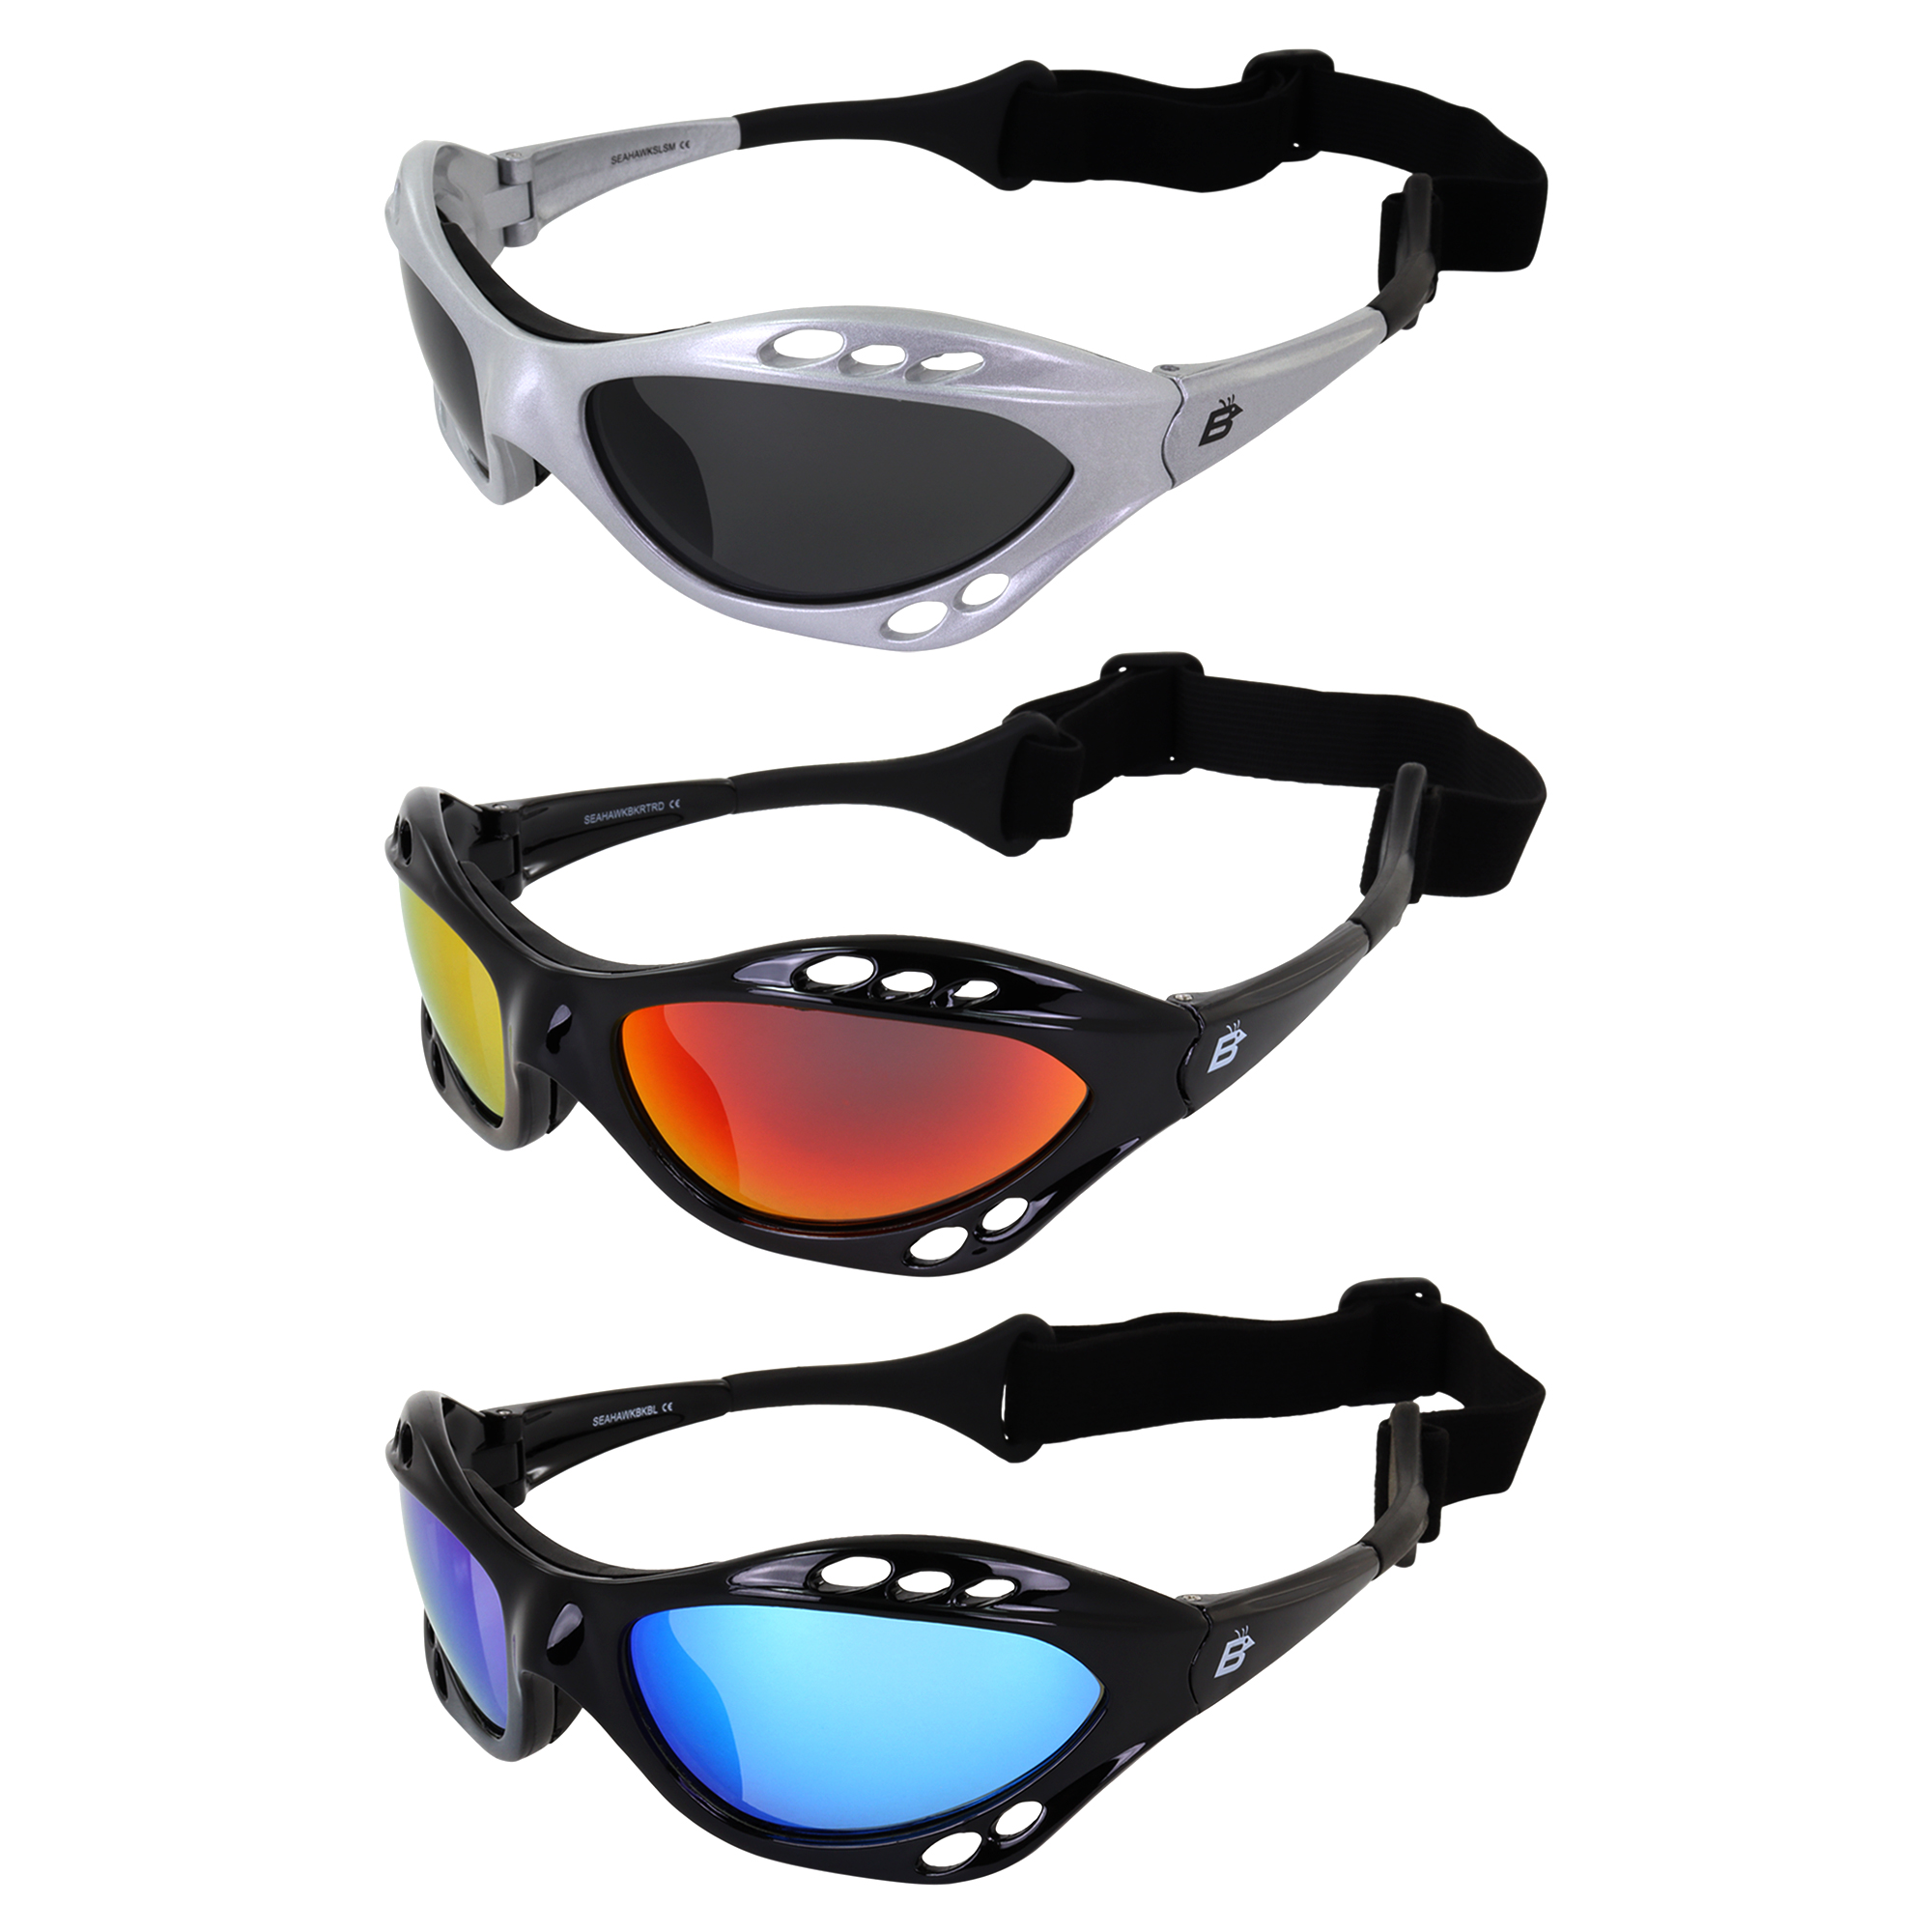 3 Pairs Birdz Seahawk Padded Polarized Sunglasses w/Strap Water Sports Surfing Kayaking Jetski Silver Frame w/Smoke Lens & Black Frame w/ Red & Green Mirror Lenses - image 1 of 7